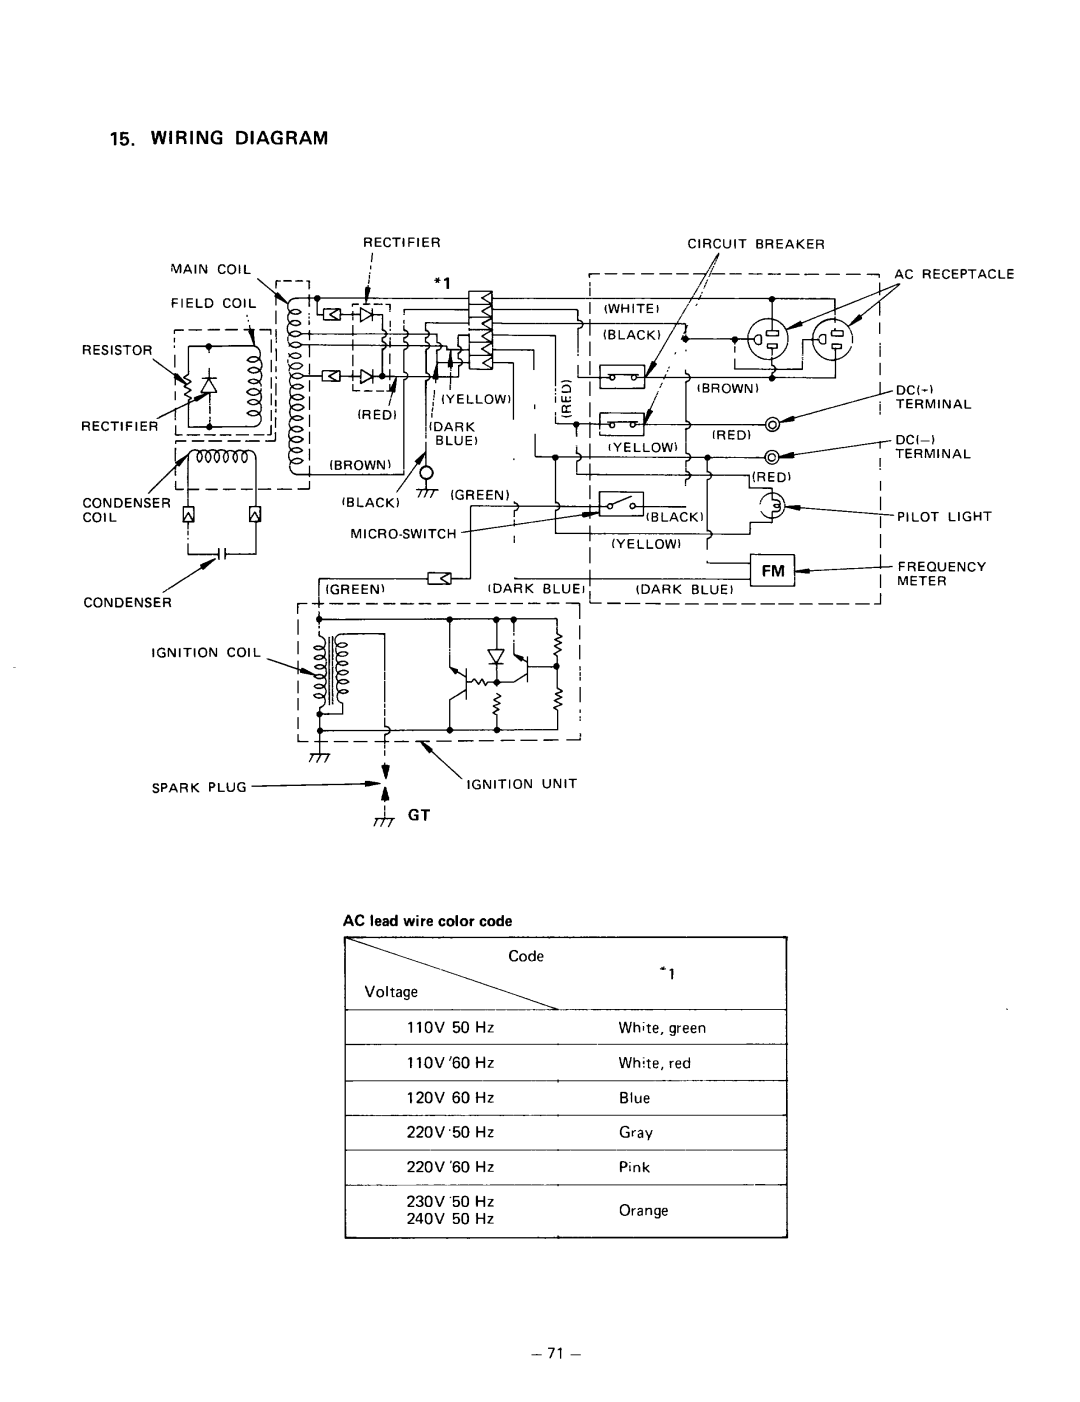 Subaru Robin Power Products R600 manual It-J, p< ”, Wiring Diagram 